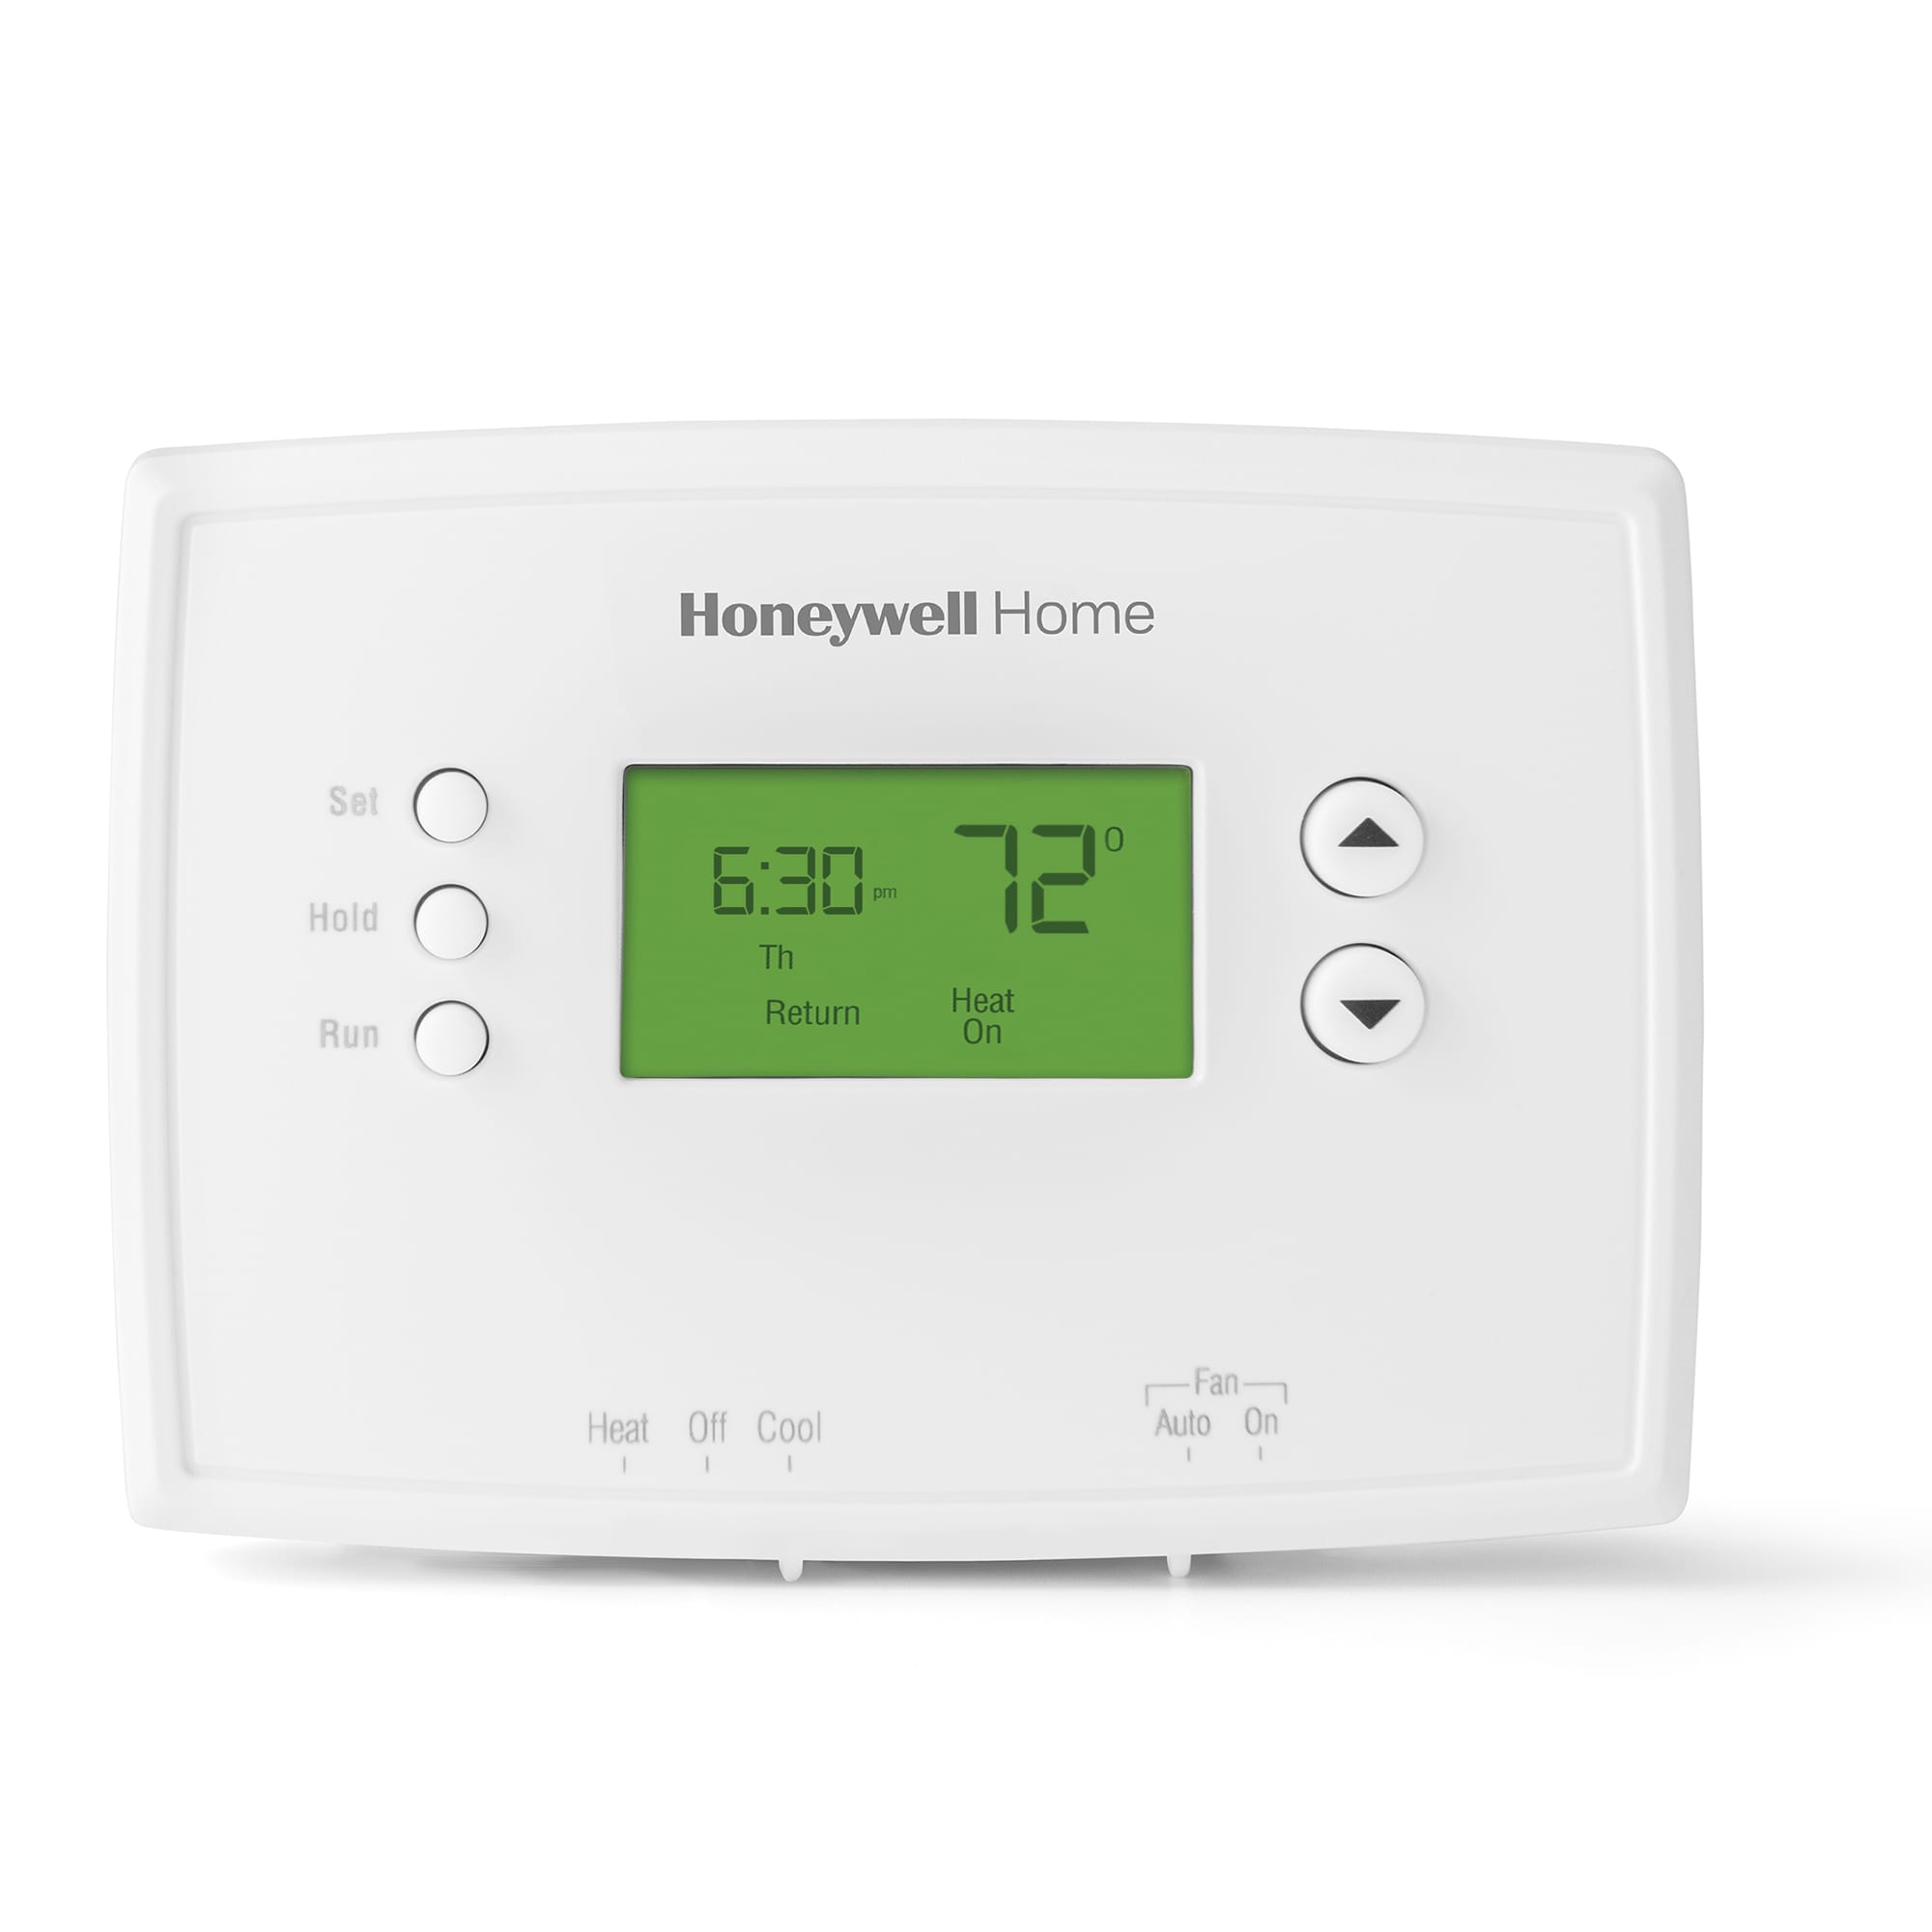 How Do I Set My Honeywell Thermostat?